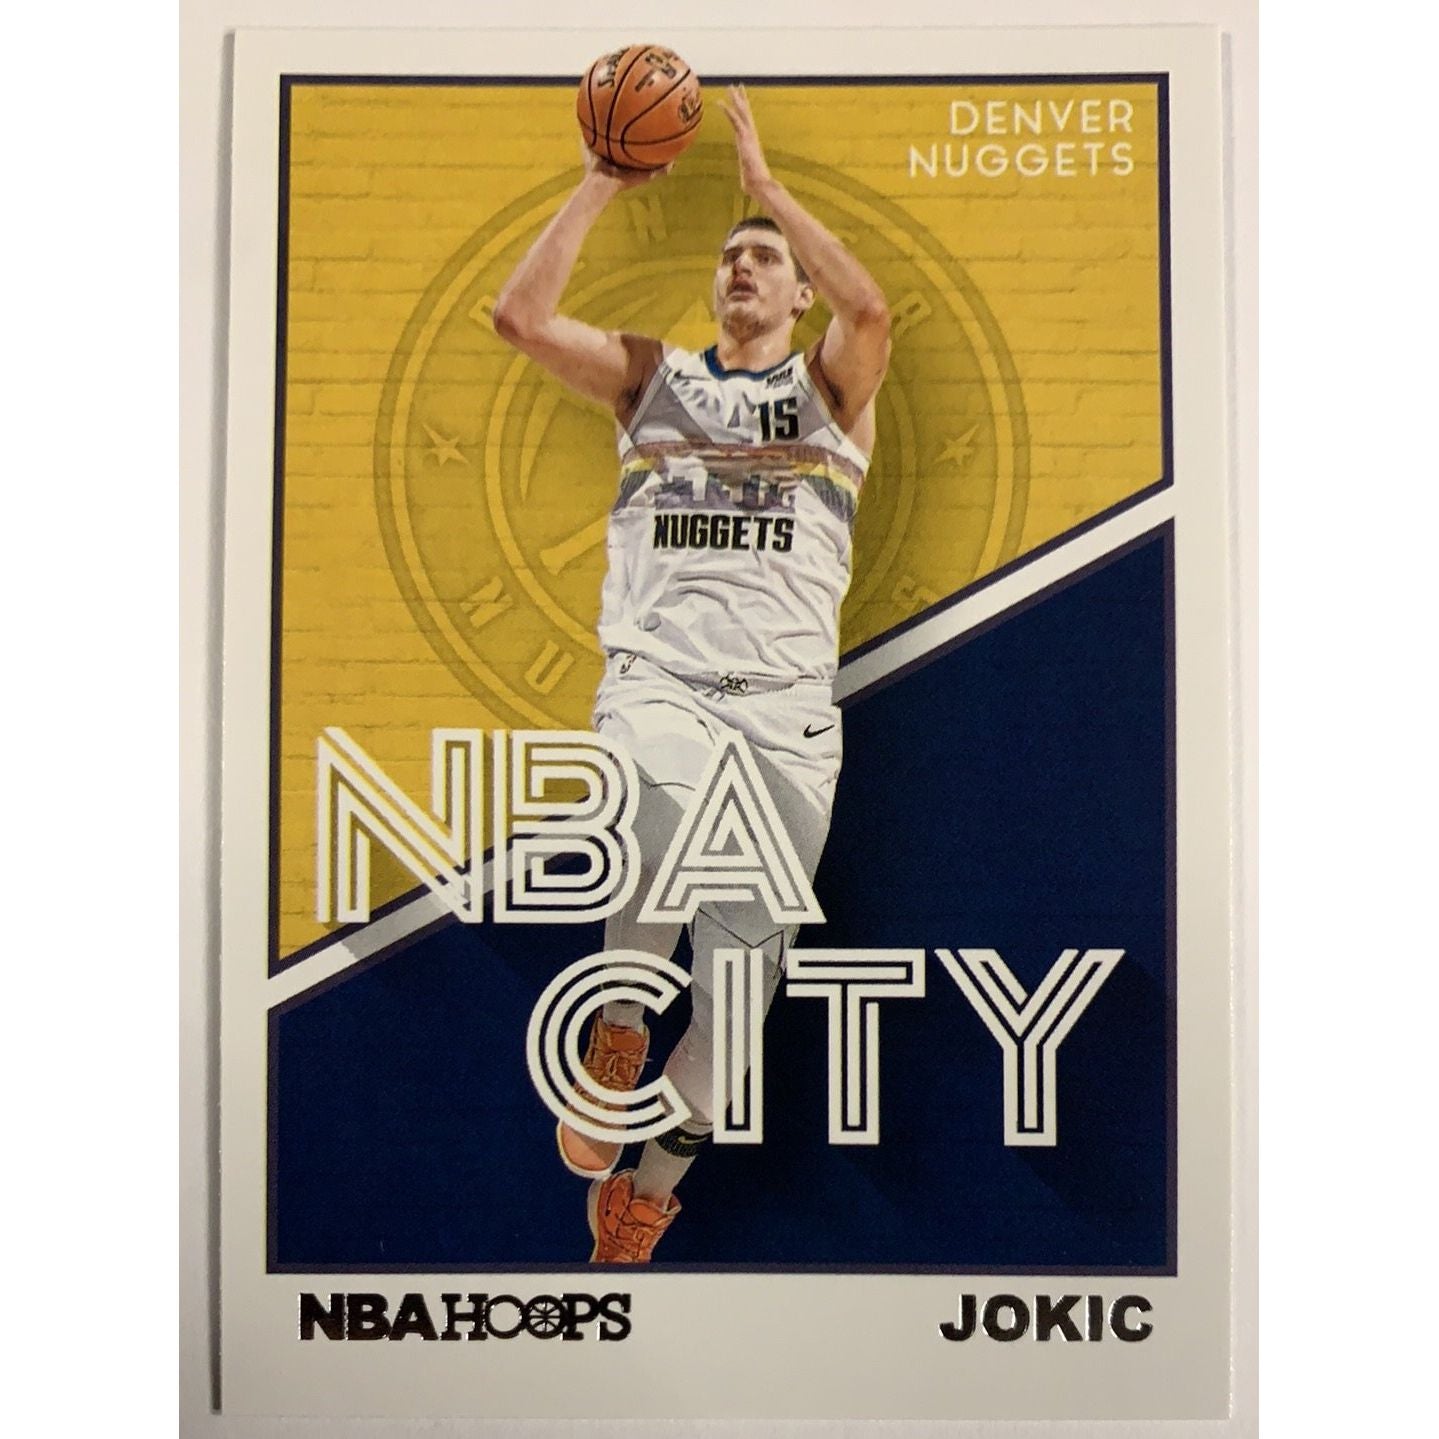  2019-20 Hoops NBA City Nikola Jokic  Local Legends Cards & Collectibles